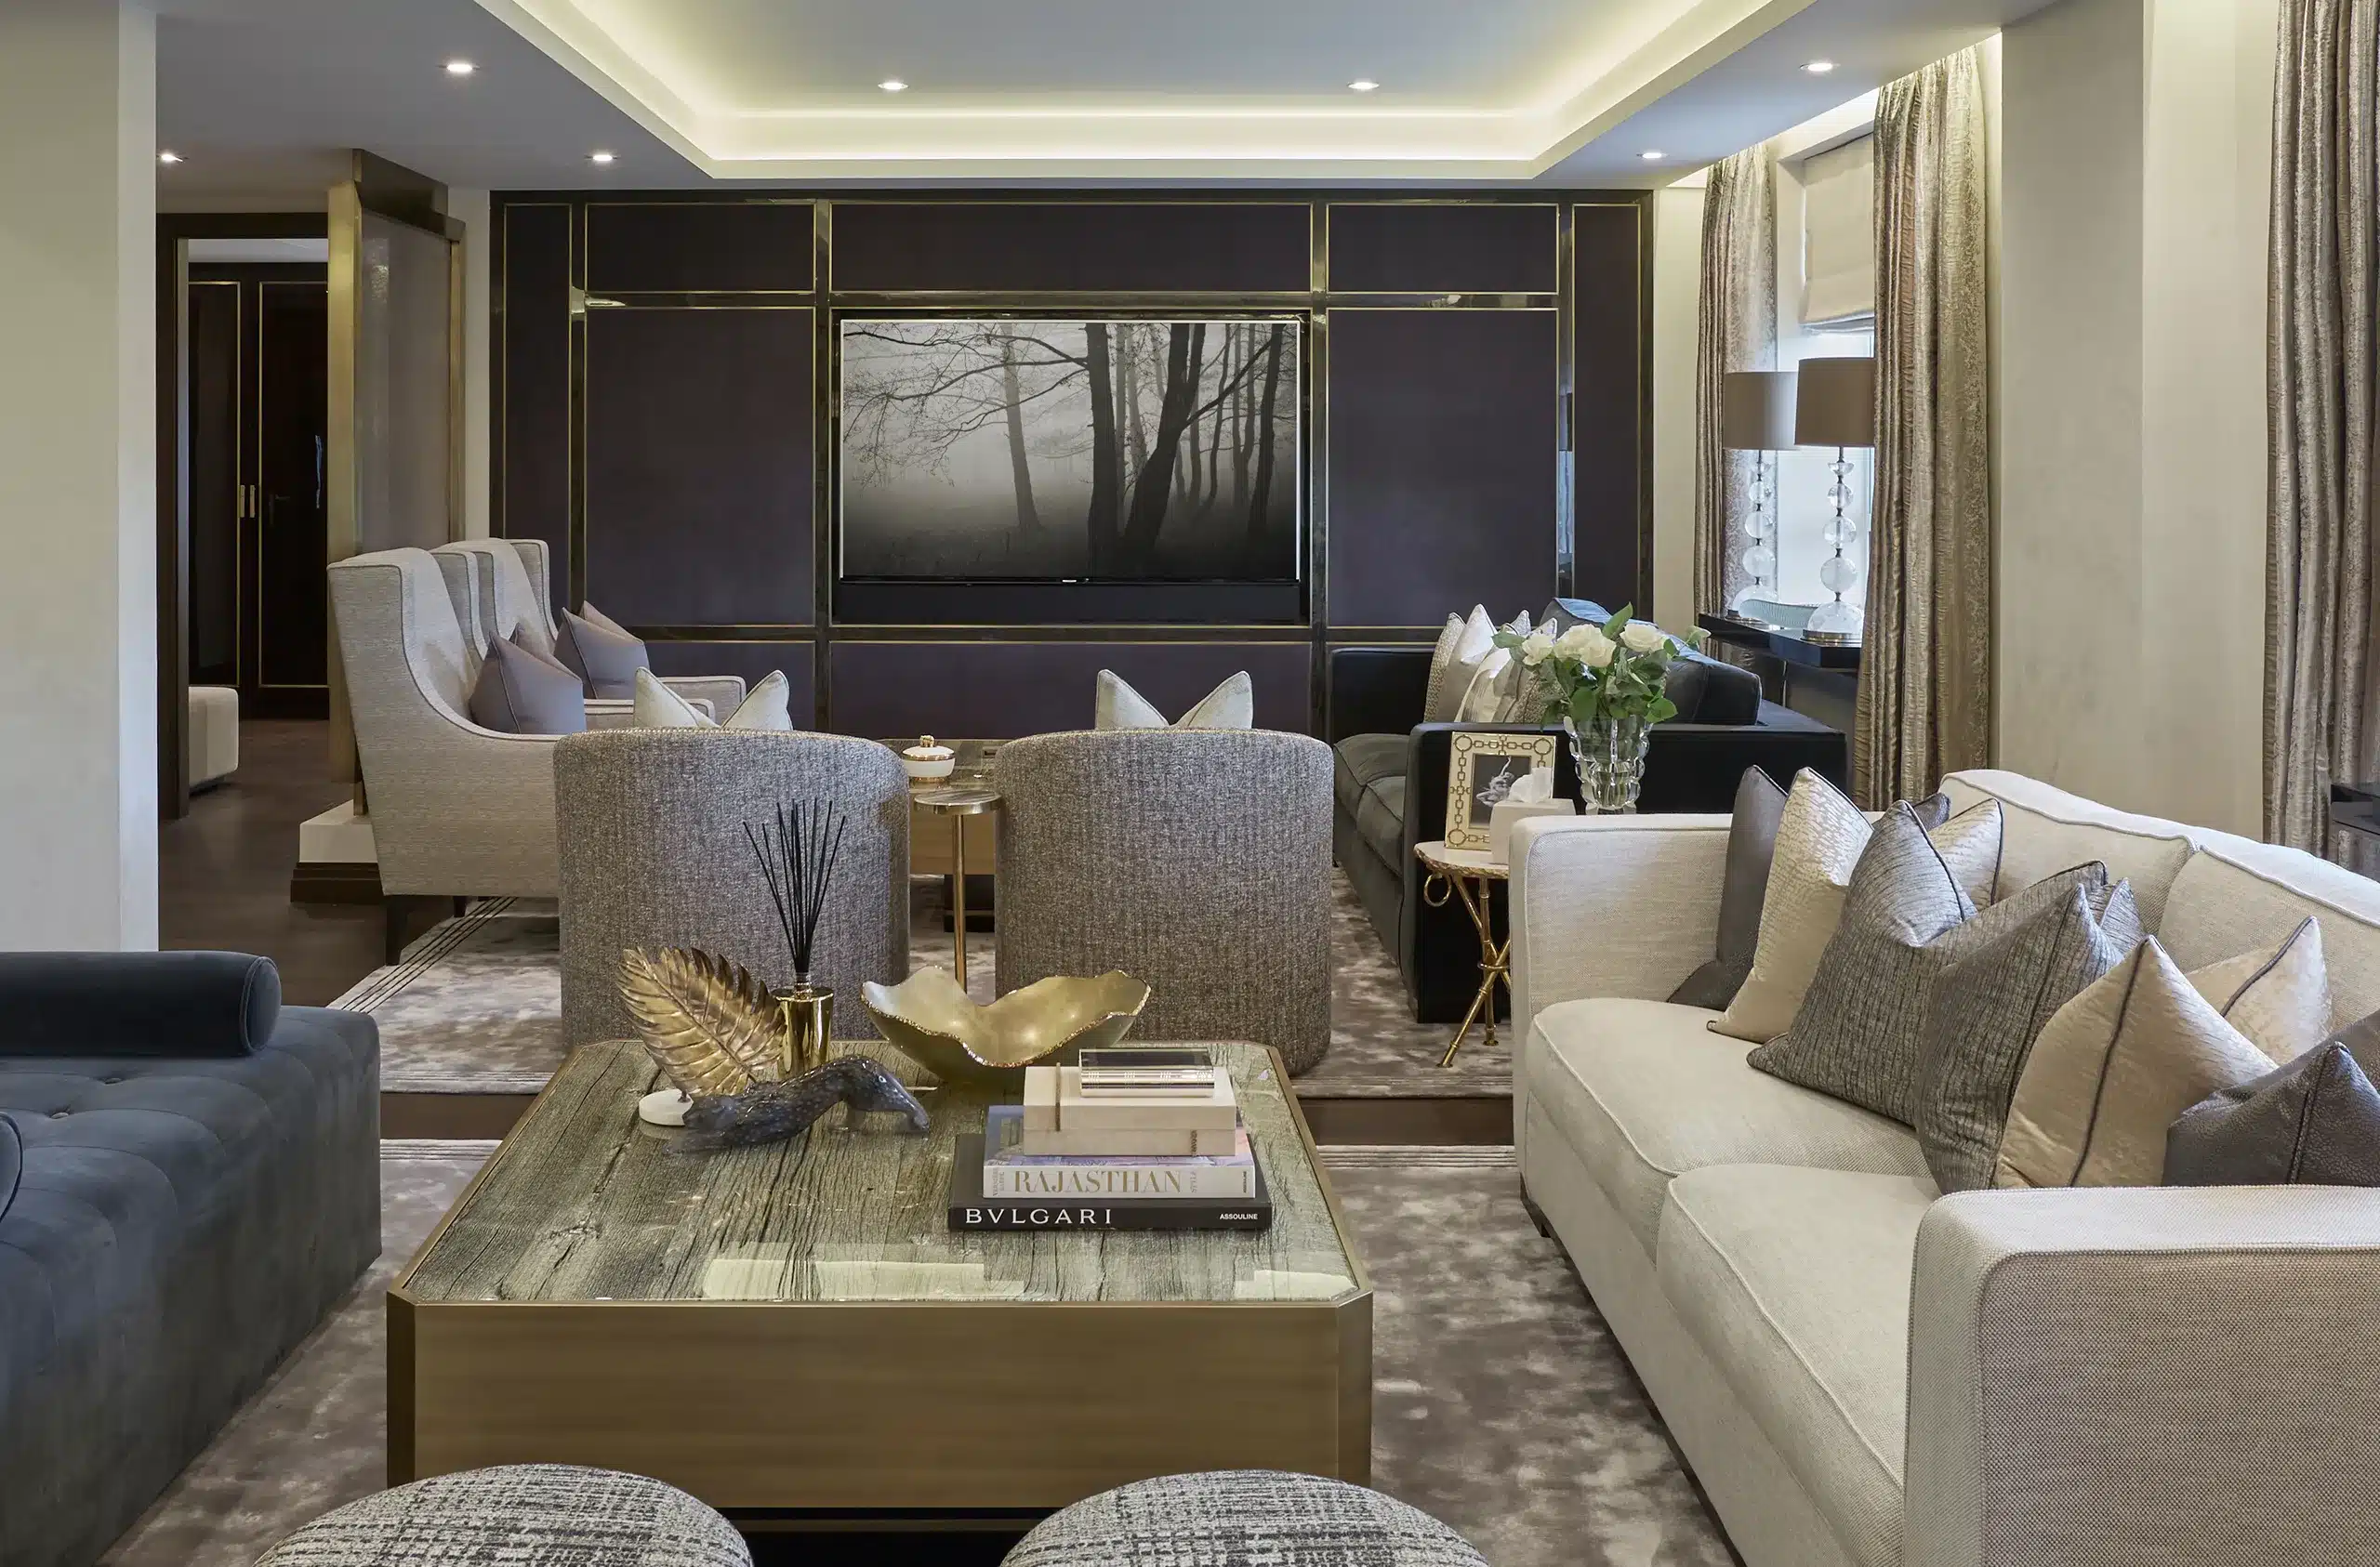 Living room at one of londons best interior designers, uk based kathatharine pooley